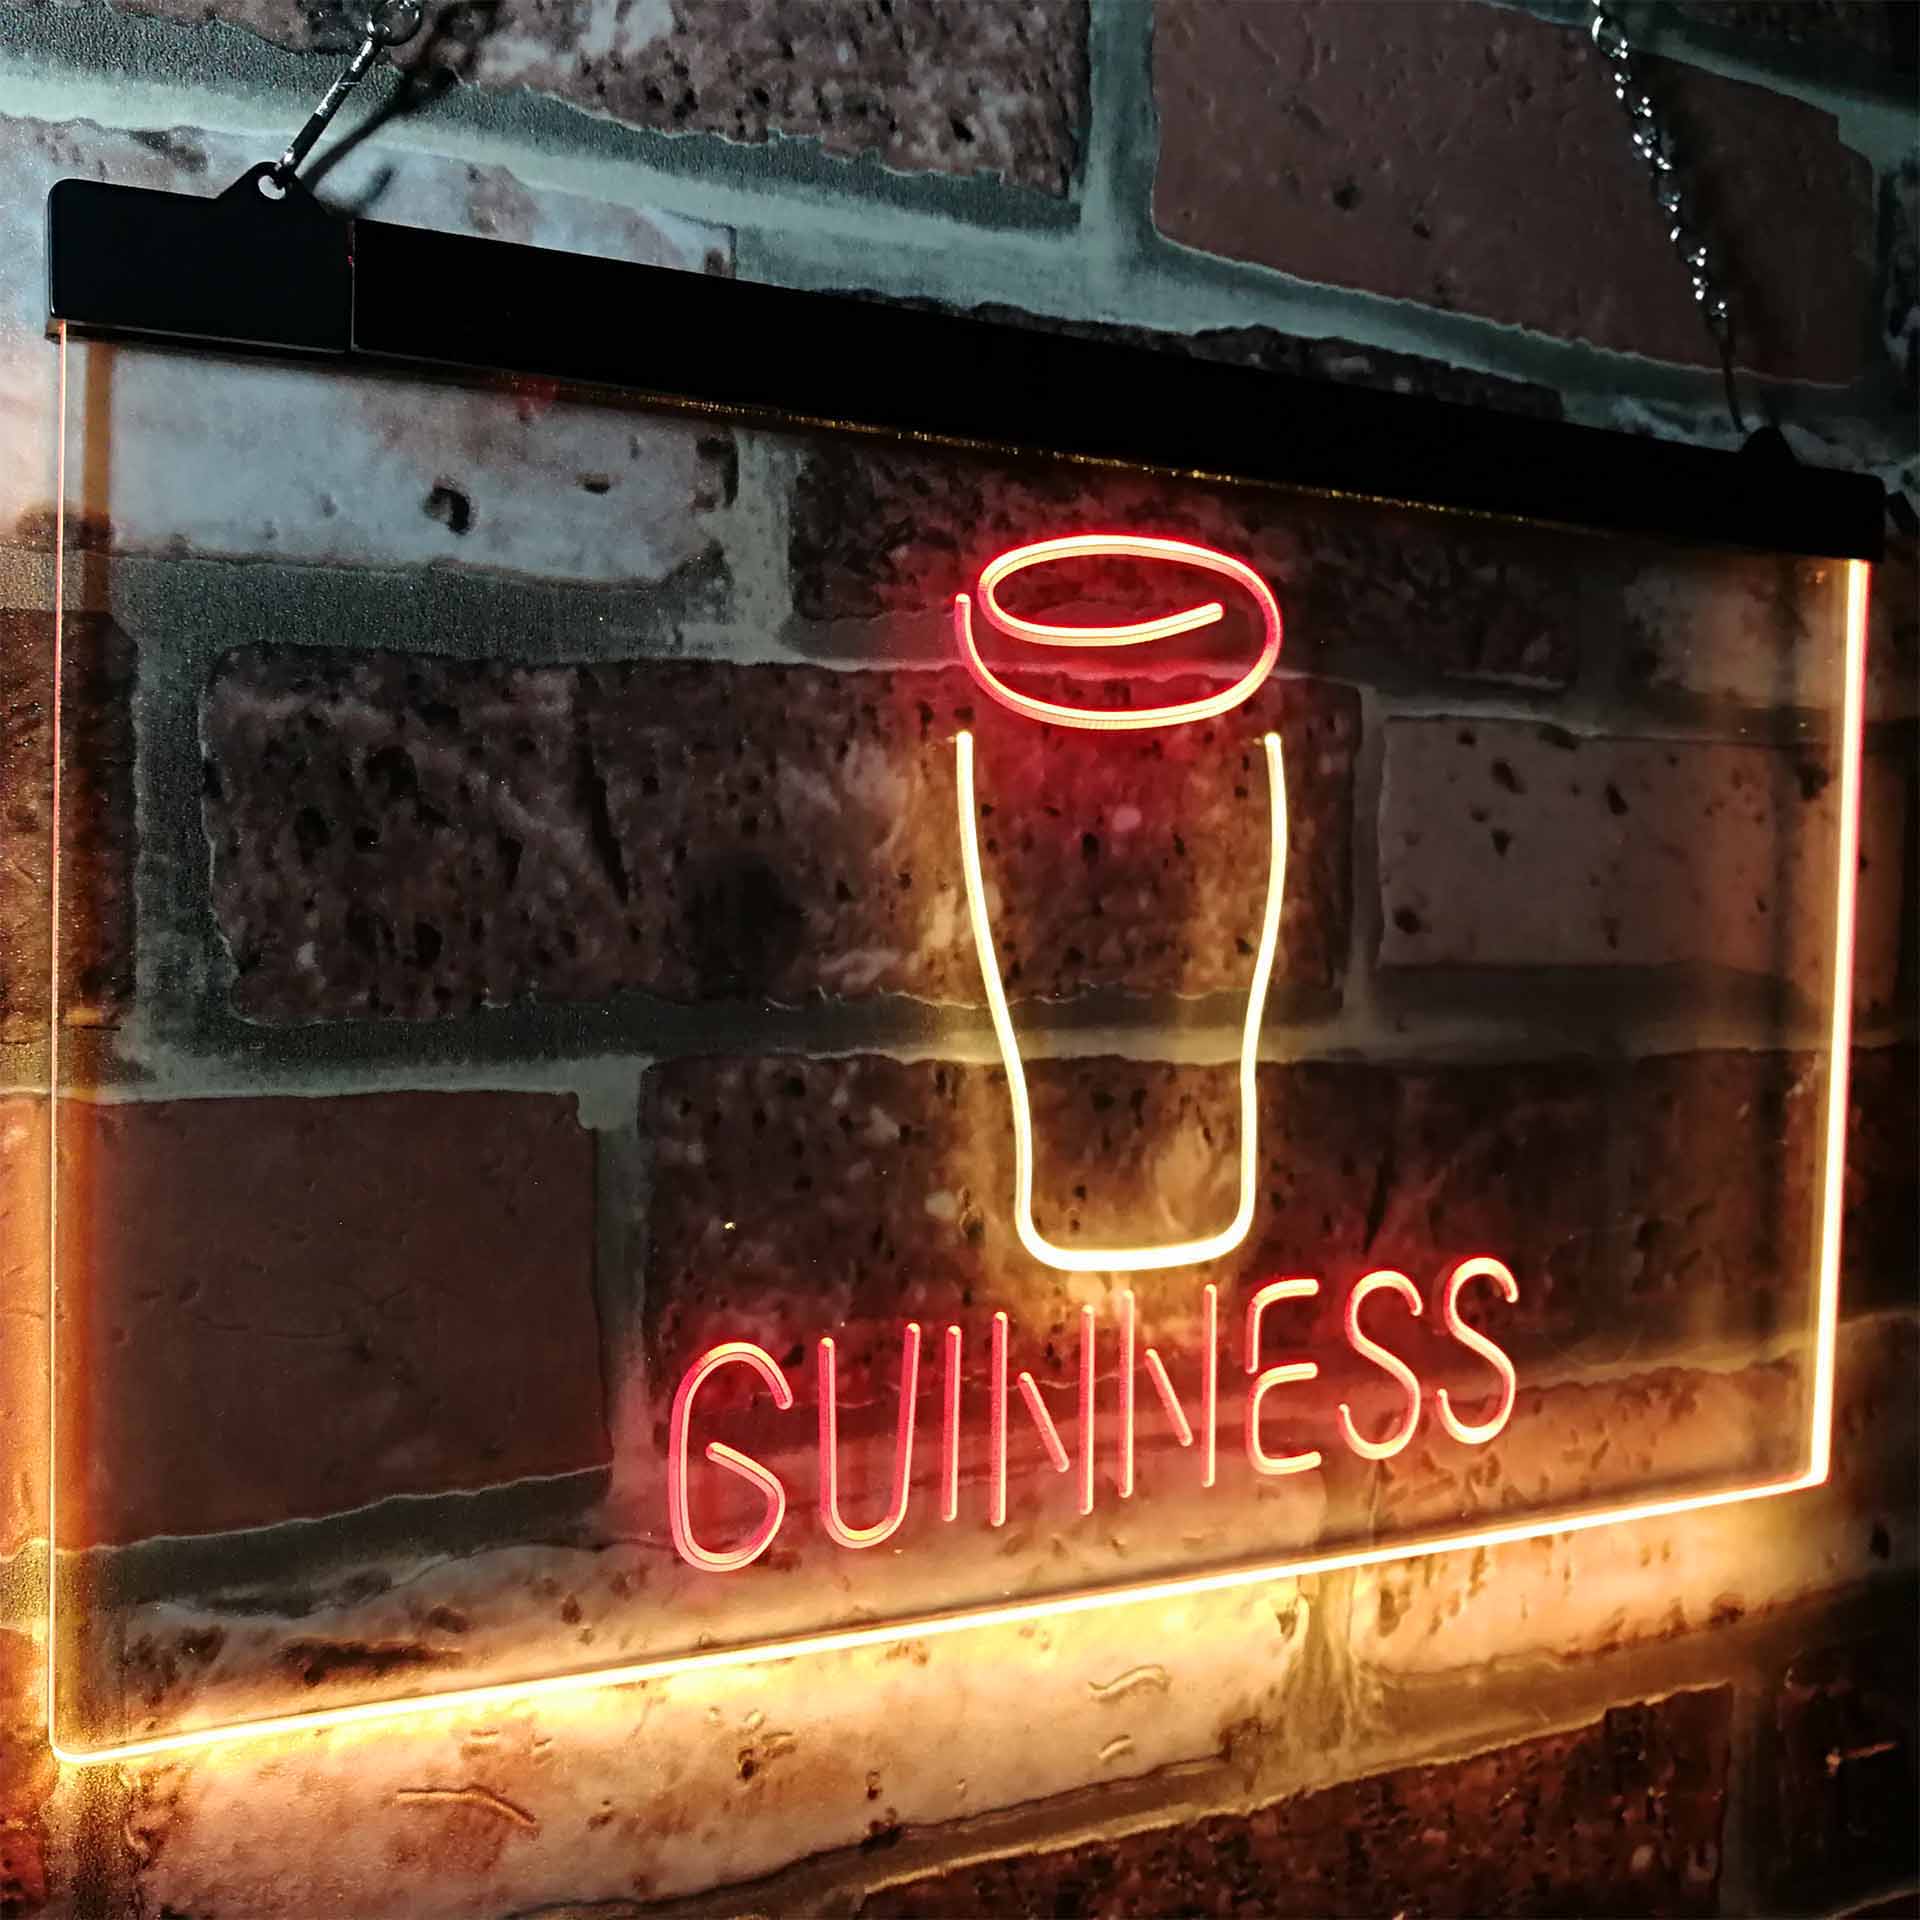 Guinness Glass Beer on tap Bar Decor Neon-Like LED Sign